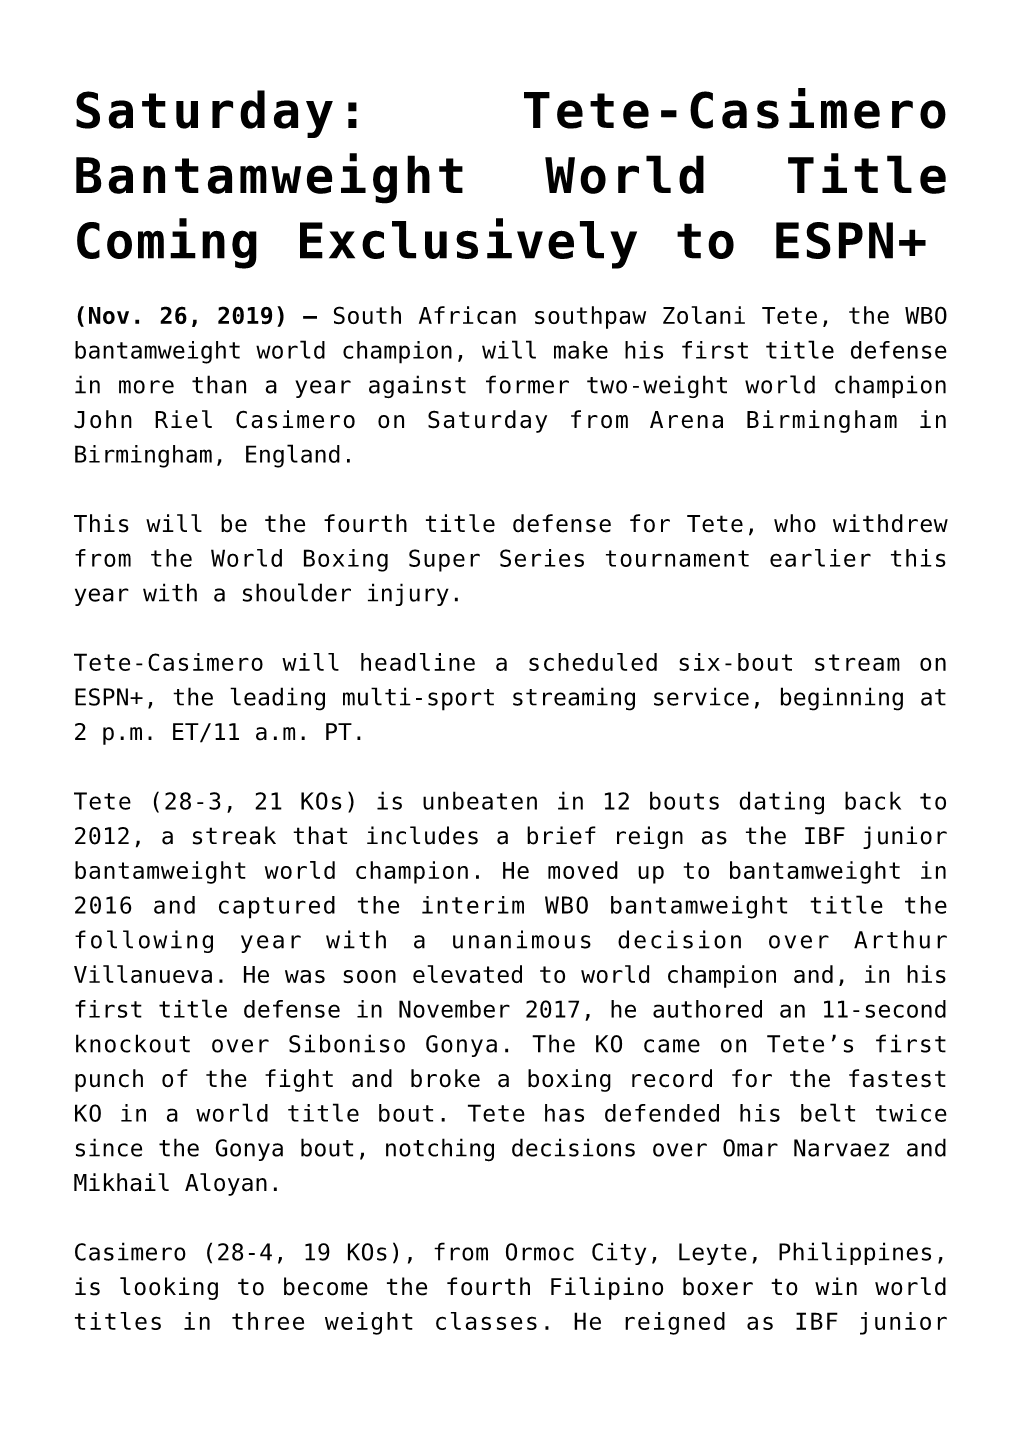 Tete-Casimero Bantamweight World Title Coming Exclusively to ESPN+